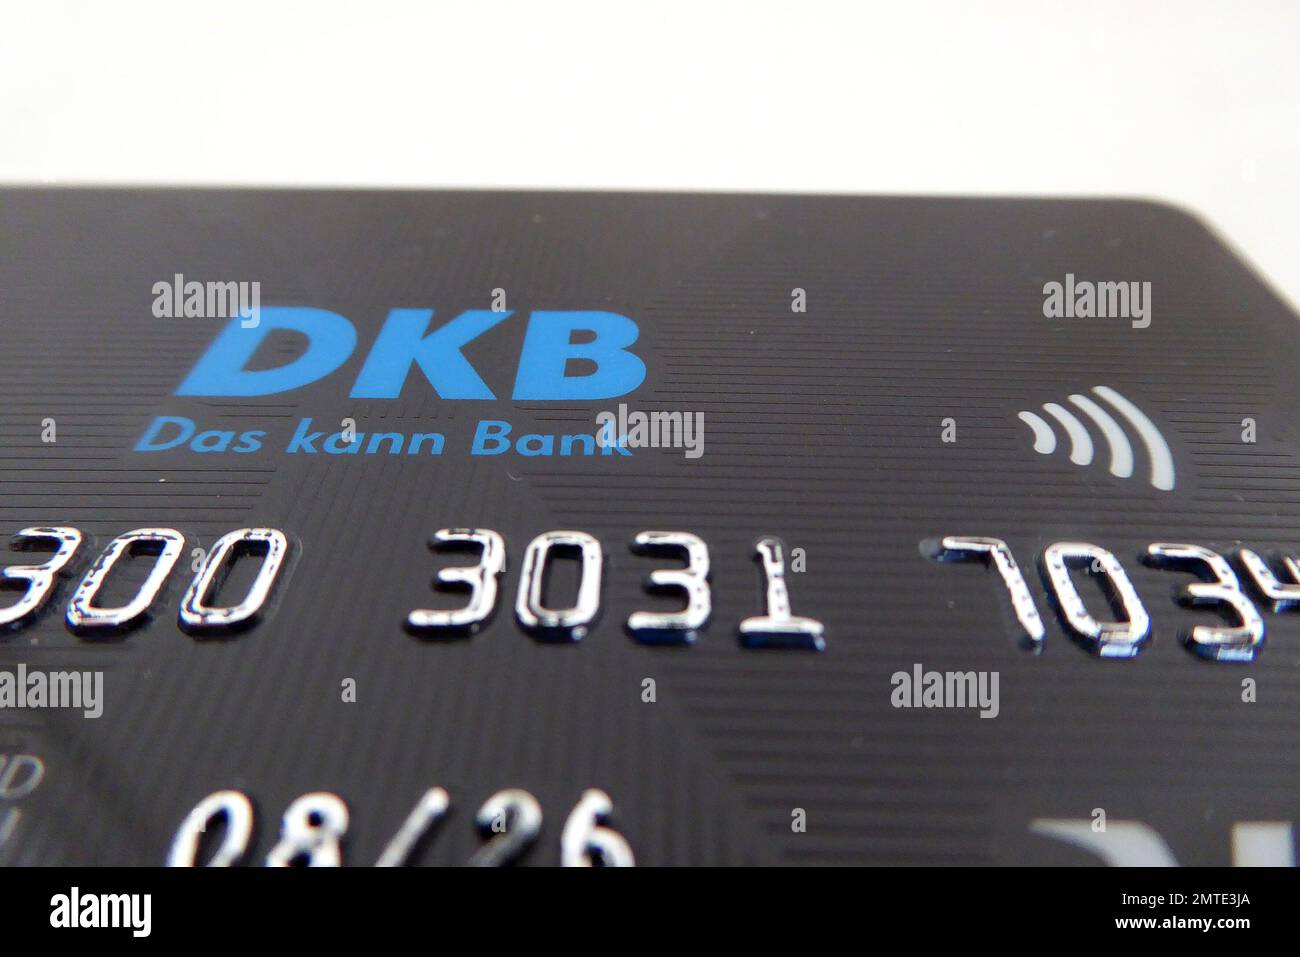 Kreditkarte / Bankkarte / EC-Karte / Bank / Deutsche Kreditbank Stock Photo